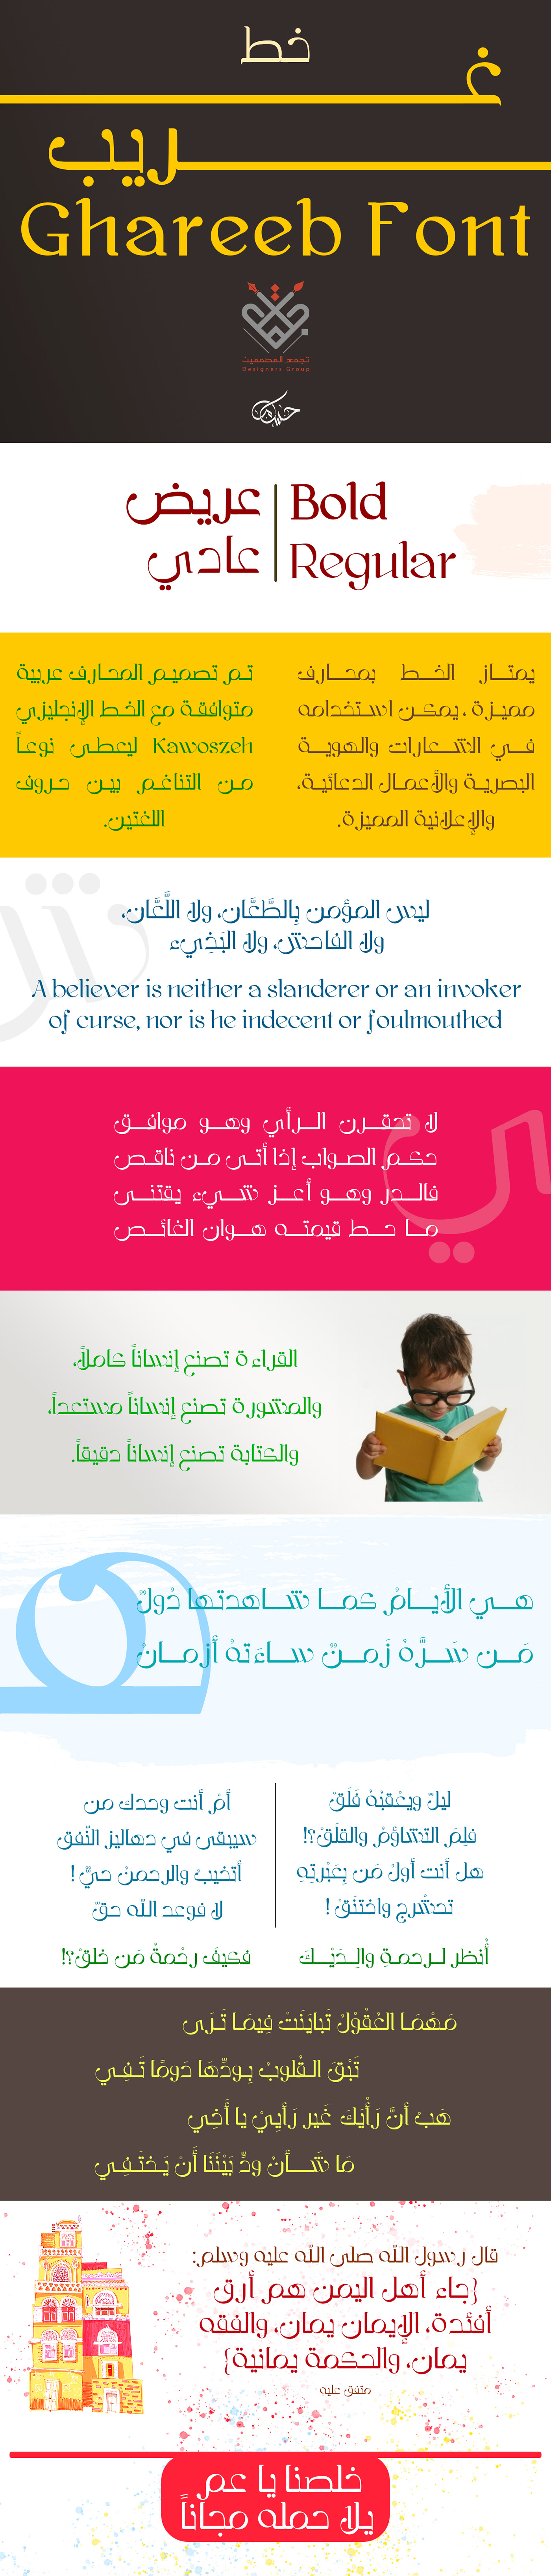 arabic font Arabic Typeface font fonts Typeface خط خط عربي خطوط